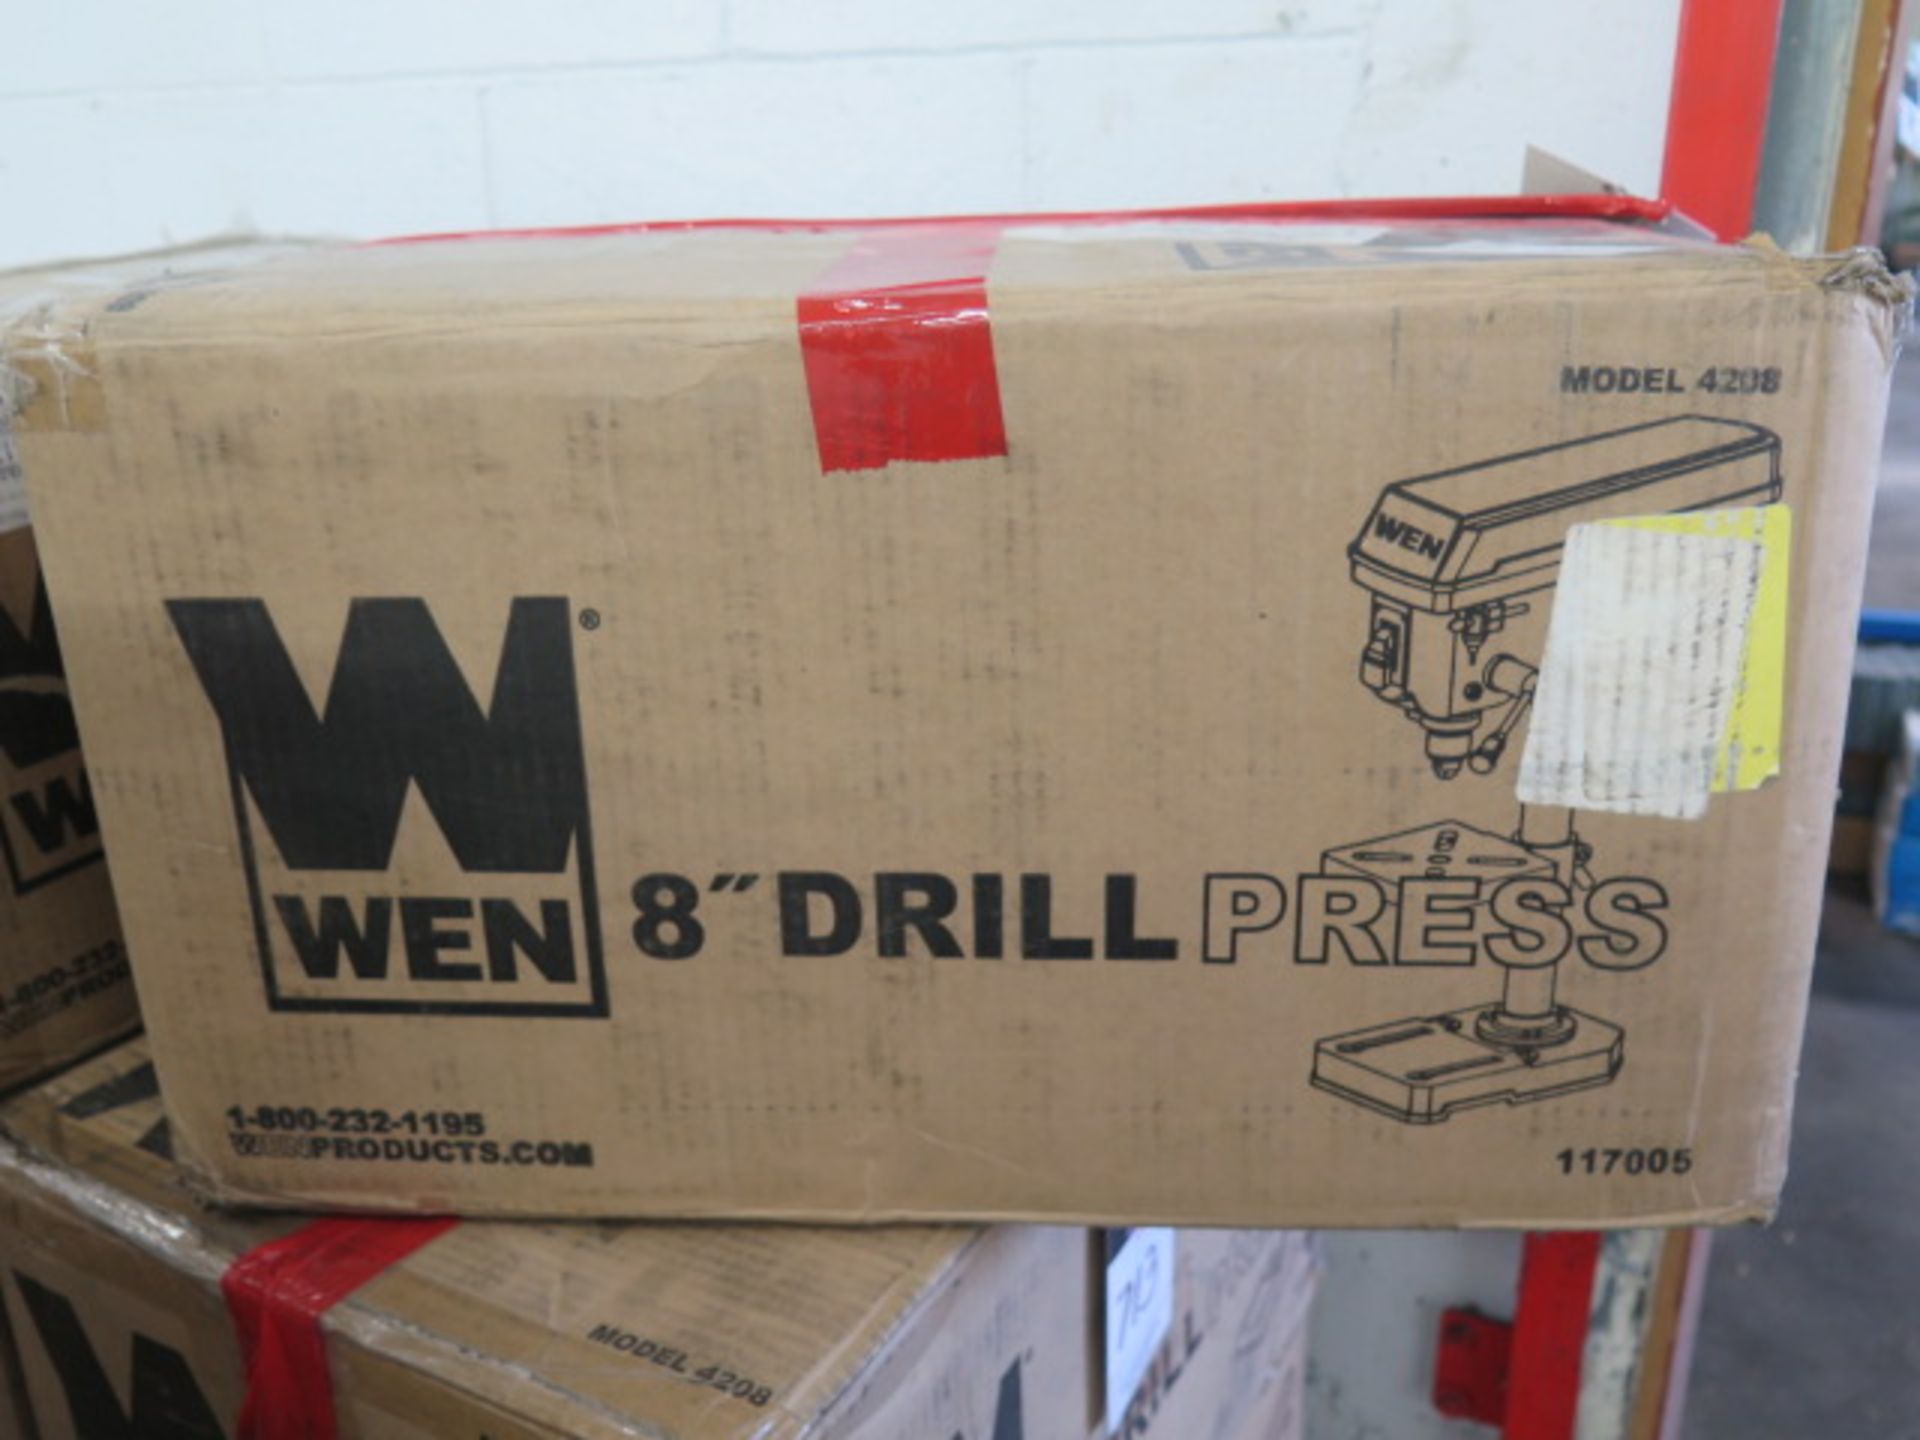 Wen 4208 8” Drill Press - Image 2 of 4